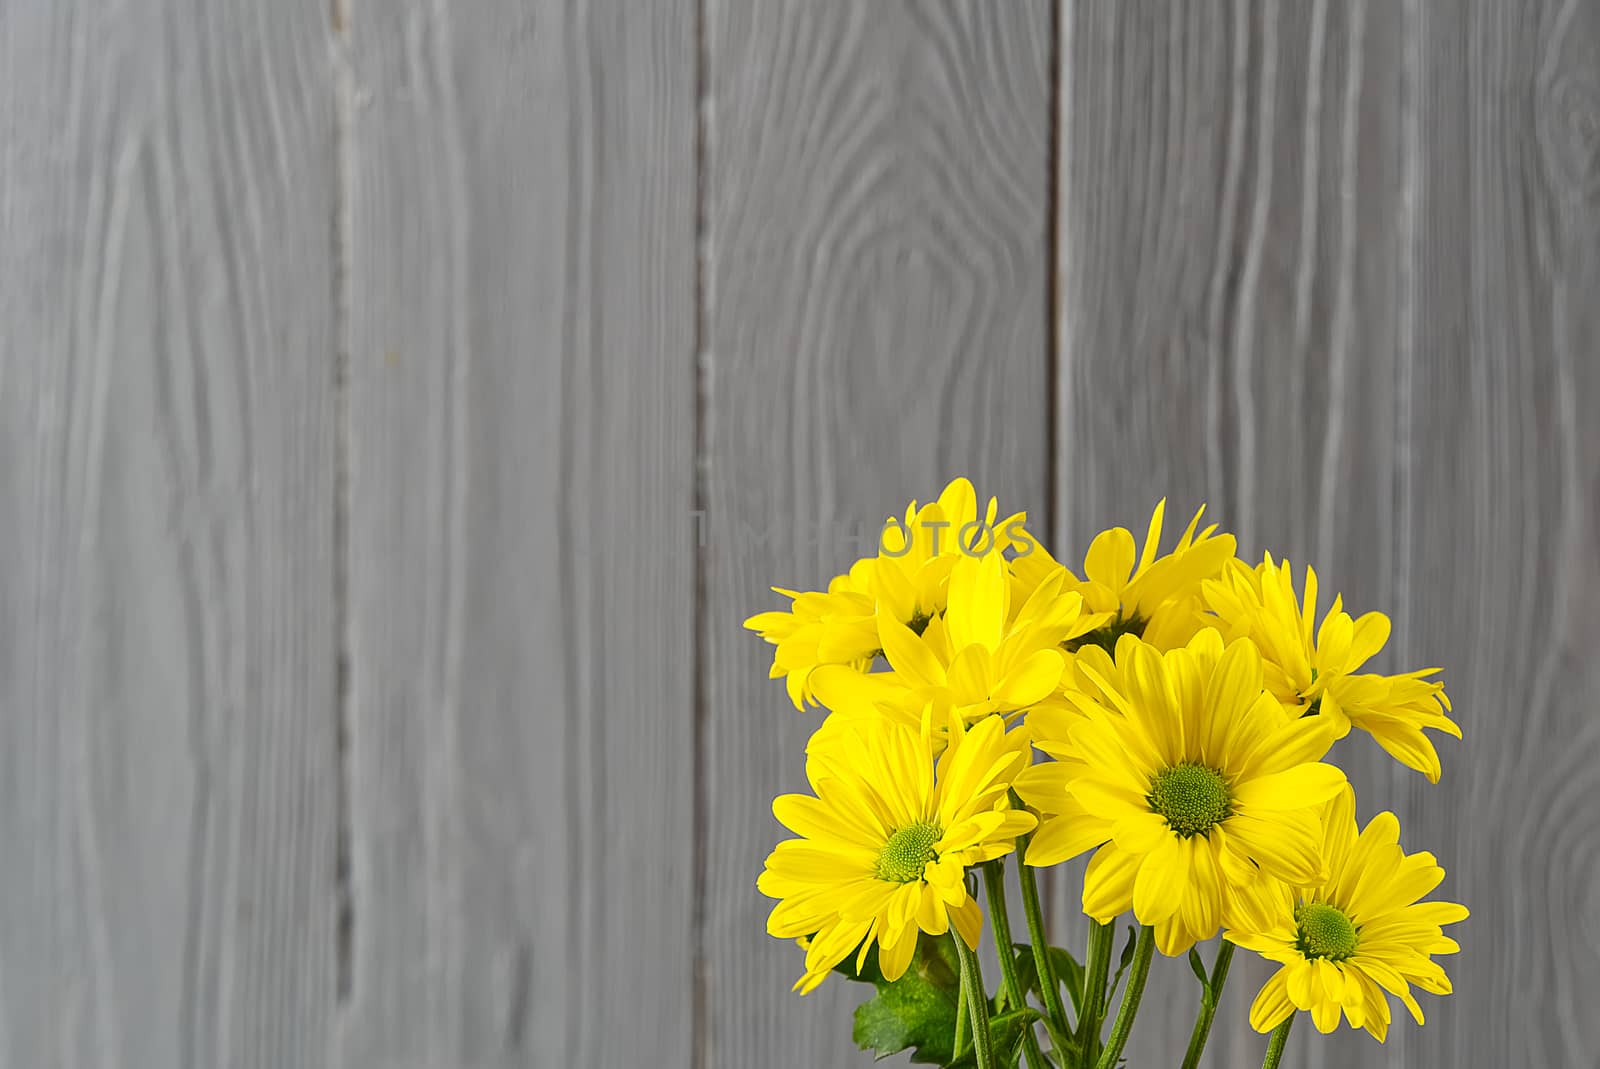 Beautiful fresh yellow chrysanthemum on grey wooden background, close-up shot, yellow daisies flowers